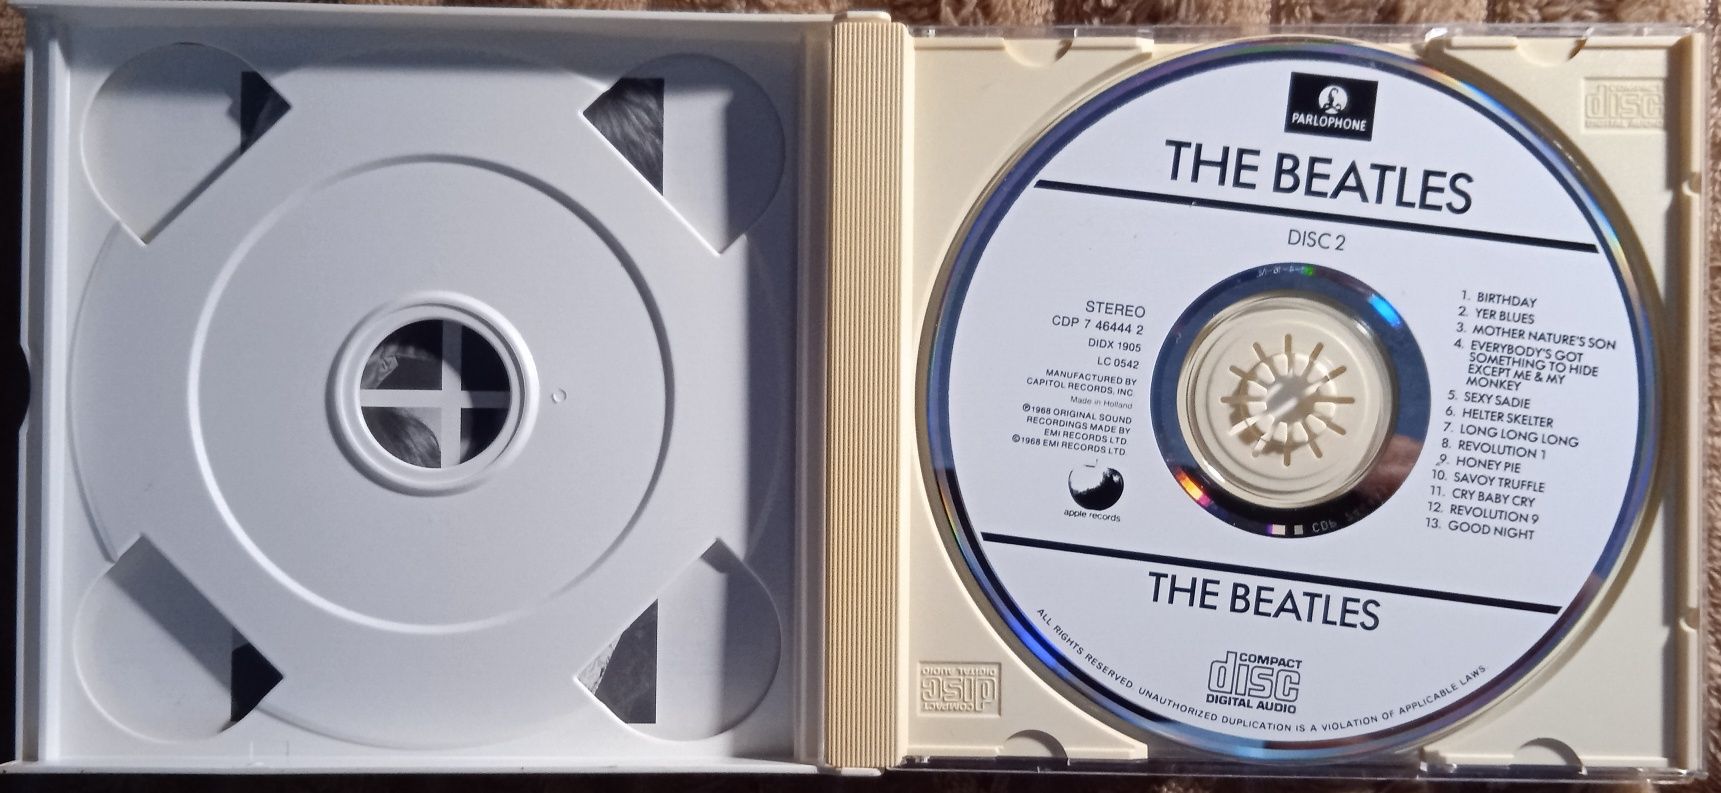 The Beatles -The Beatles (White album) 2CD